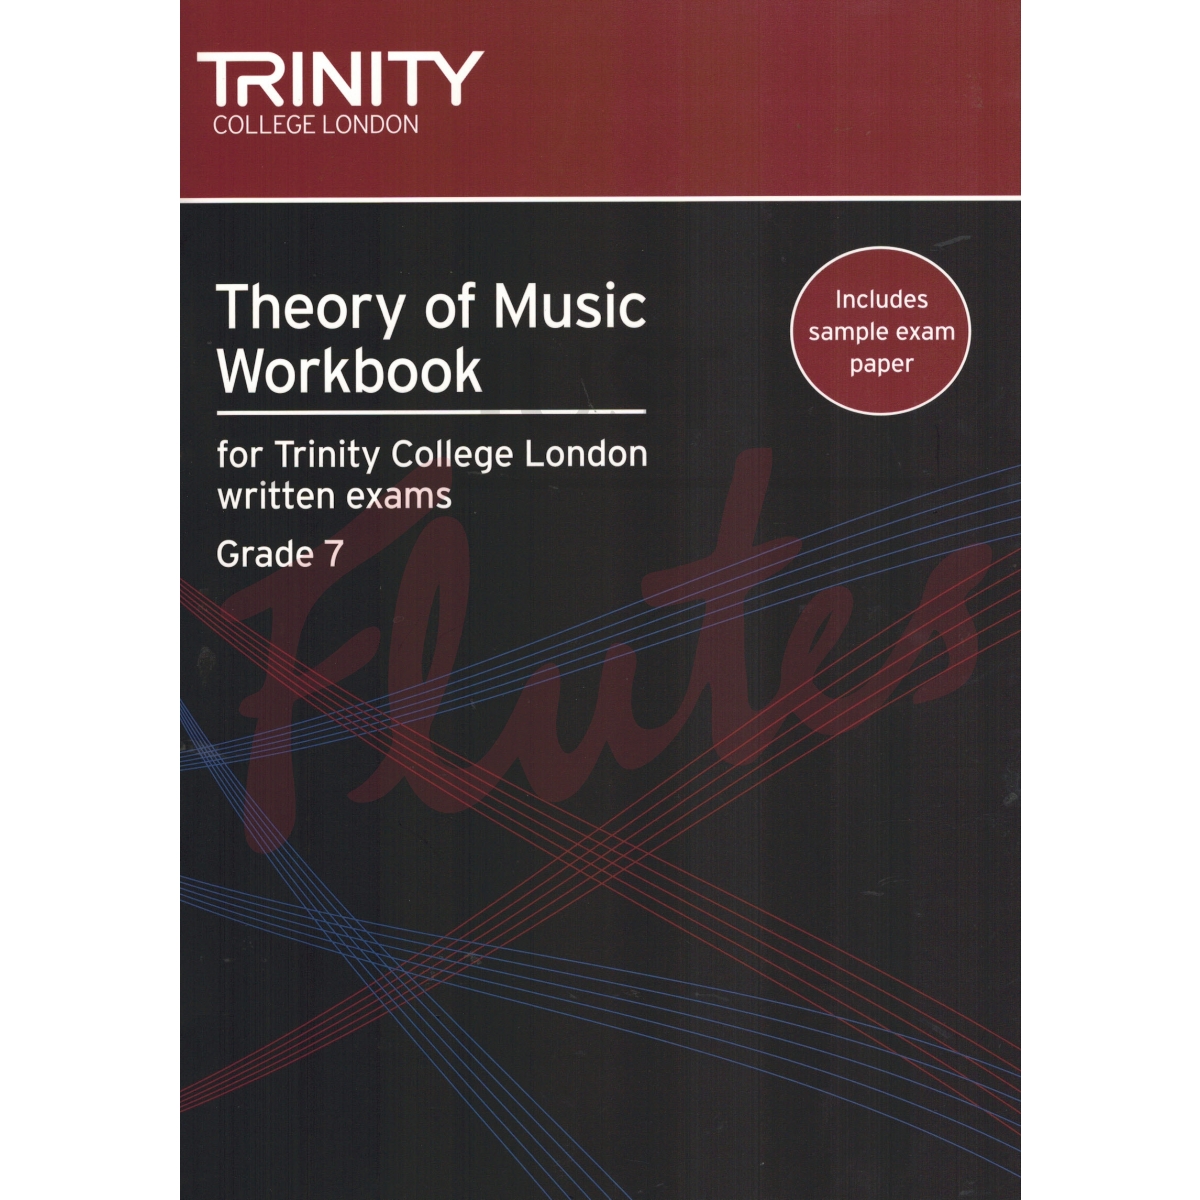 Theory of Music Workbook, Grade 7